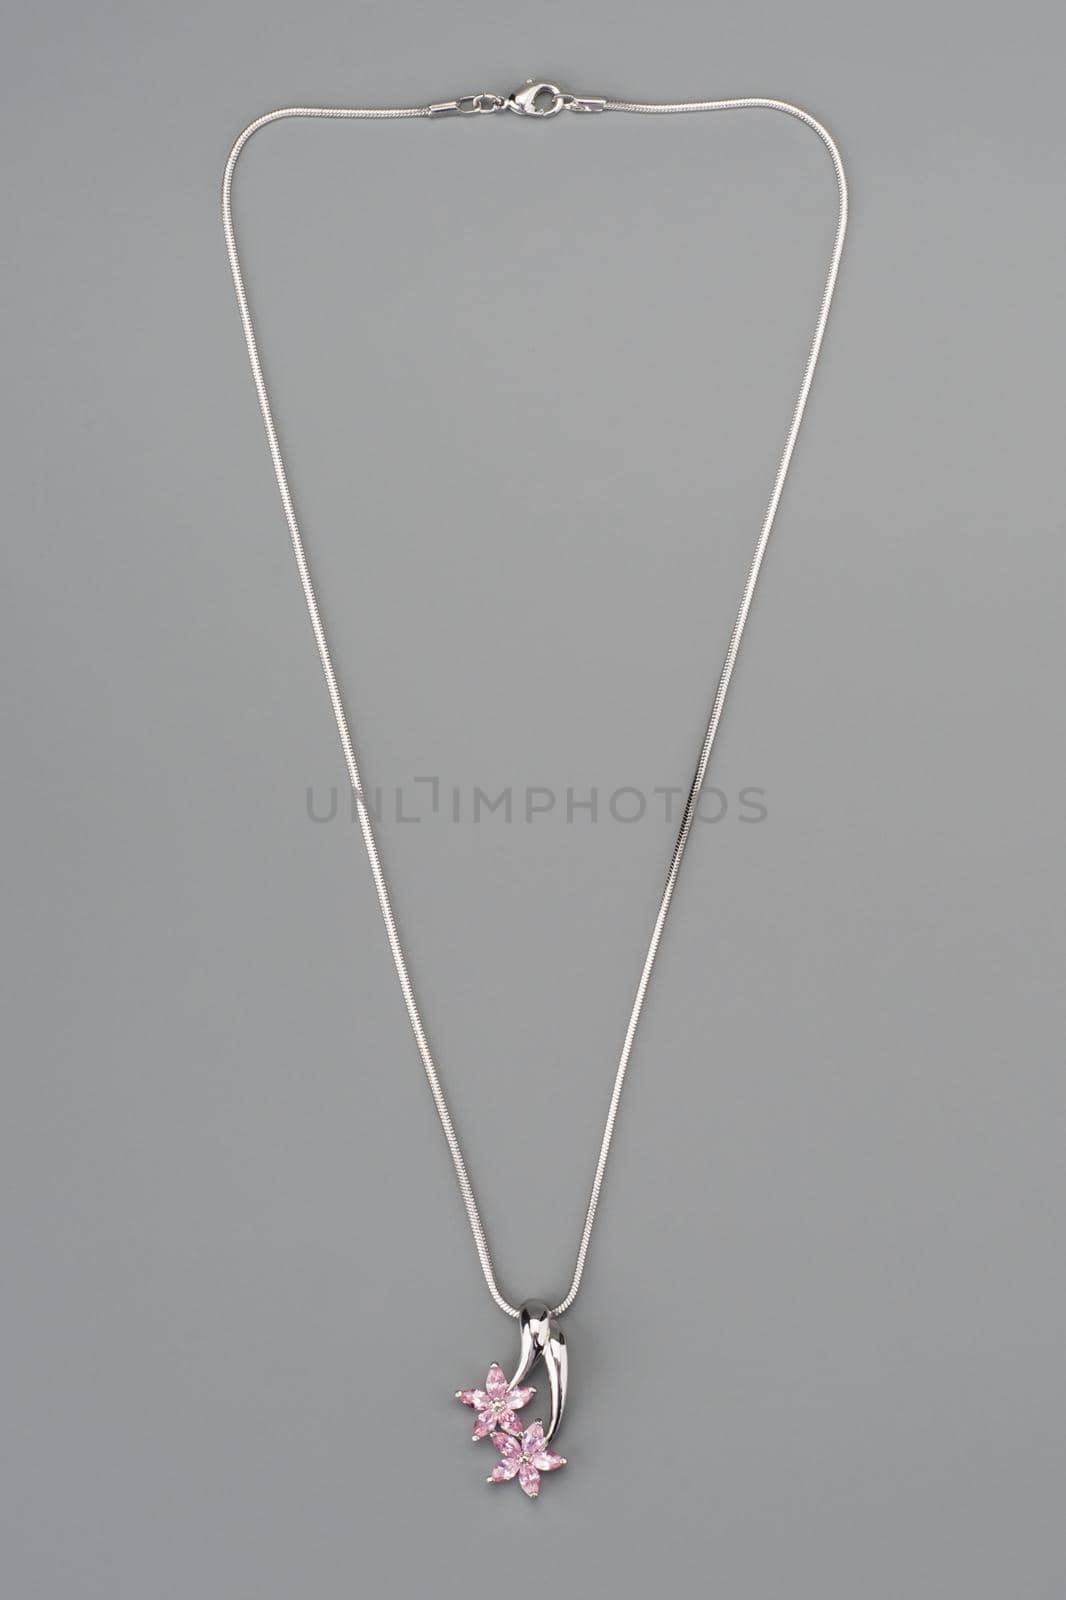 Silver pendant with gem by nikitabuida